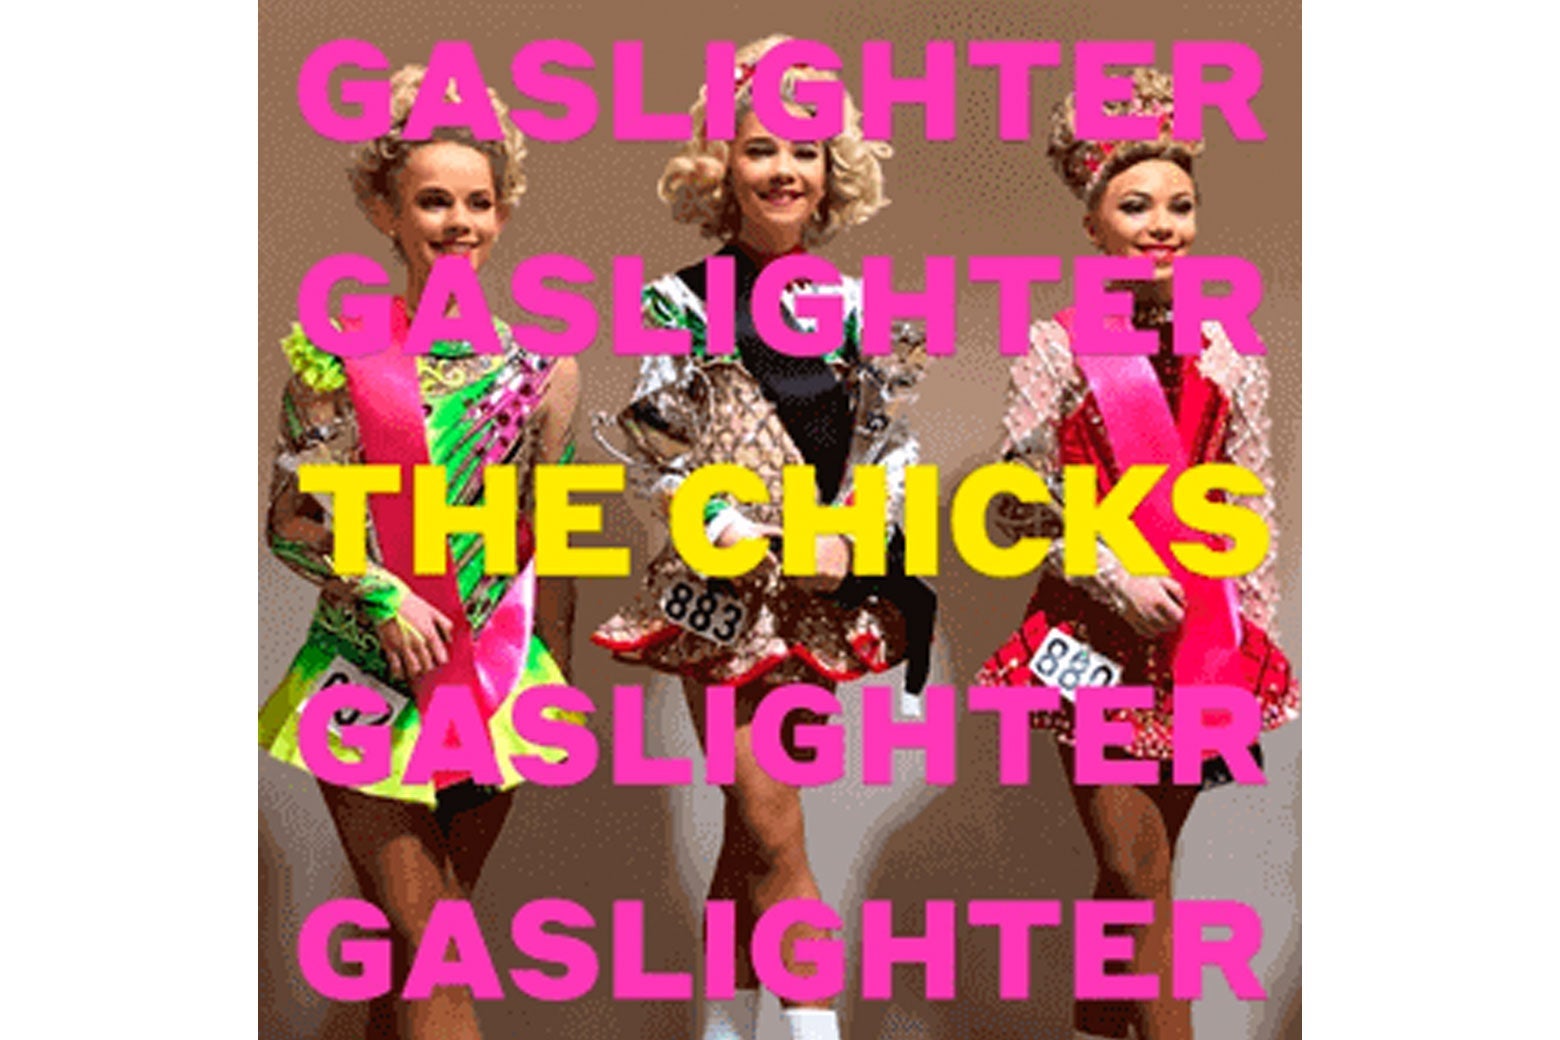 Gaslighter album cover